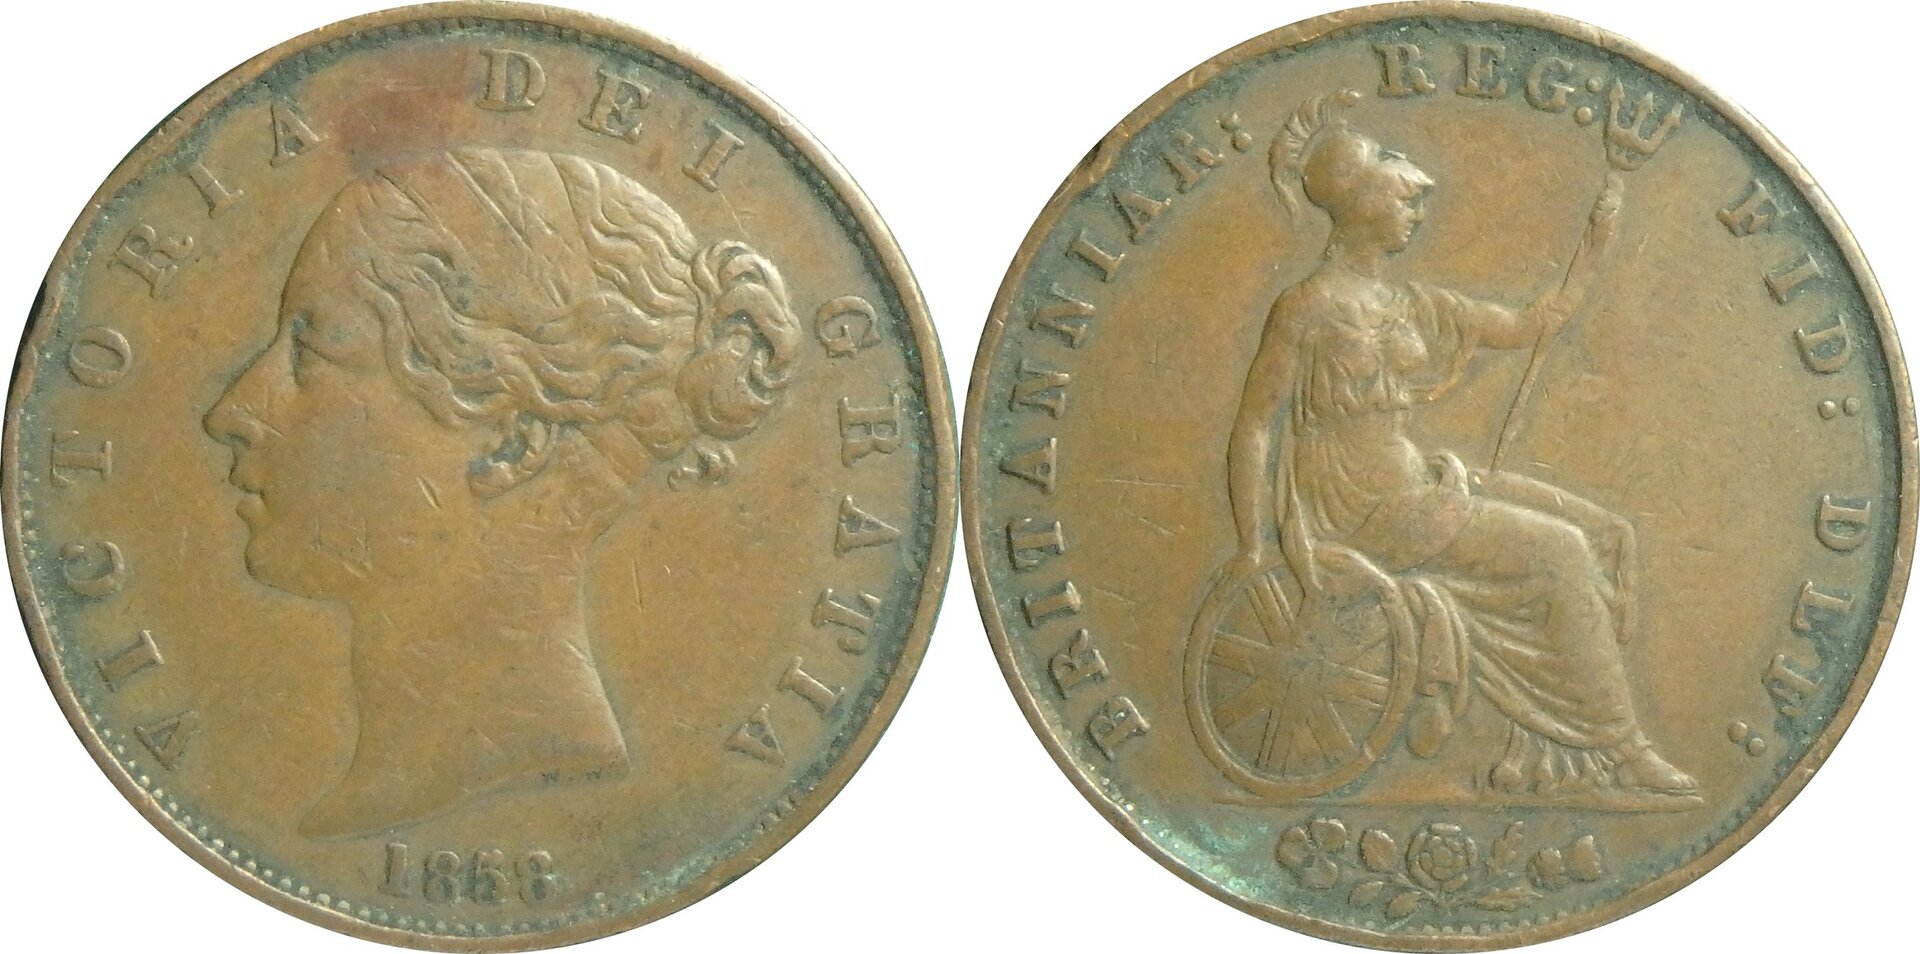 1858 GB 1-2 penny.jpg